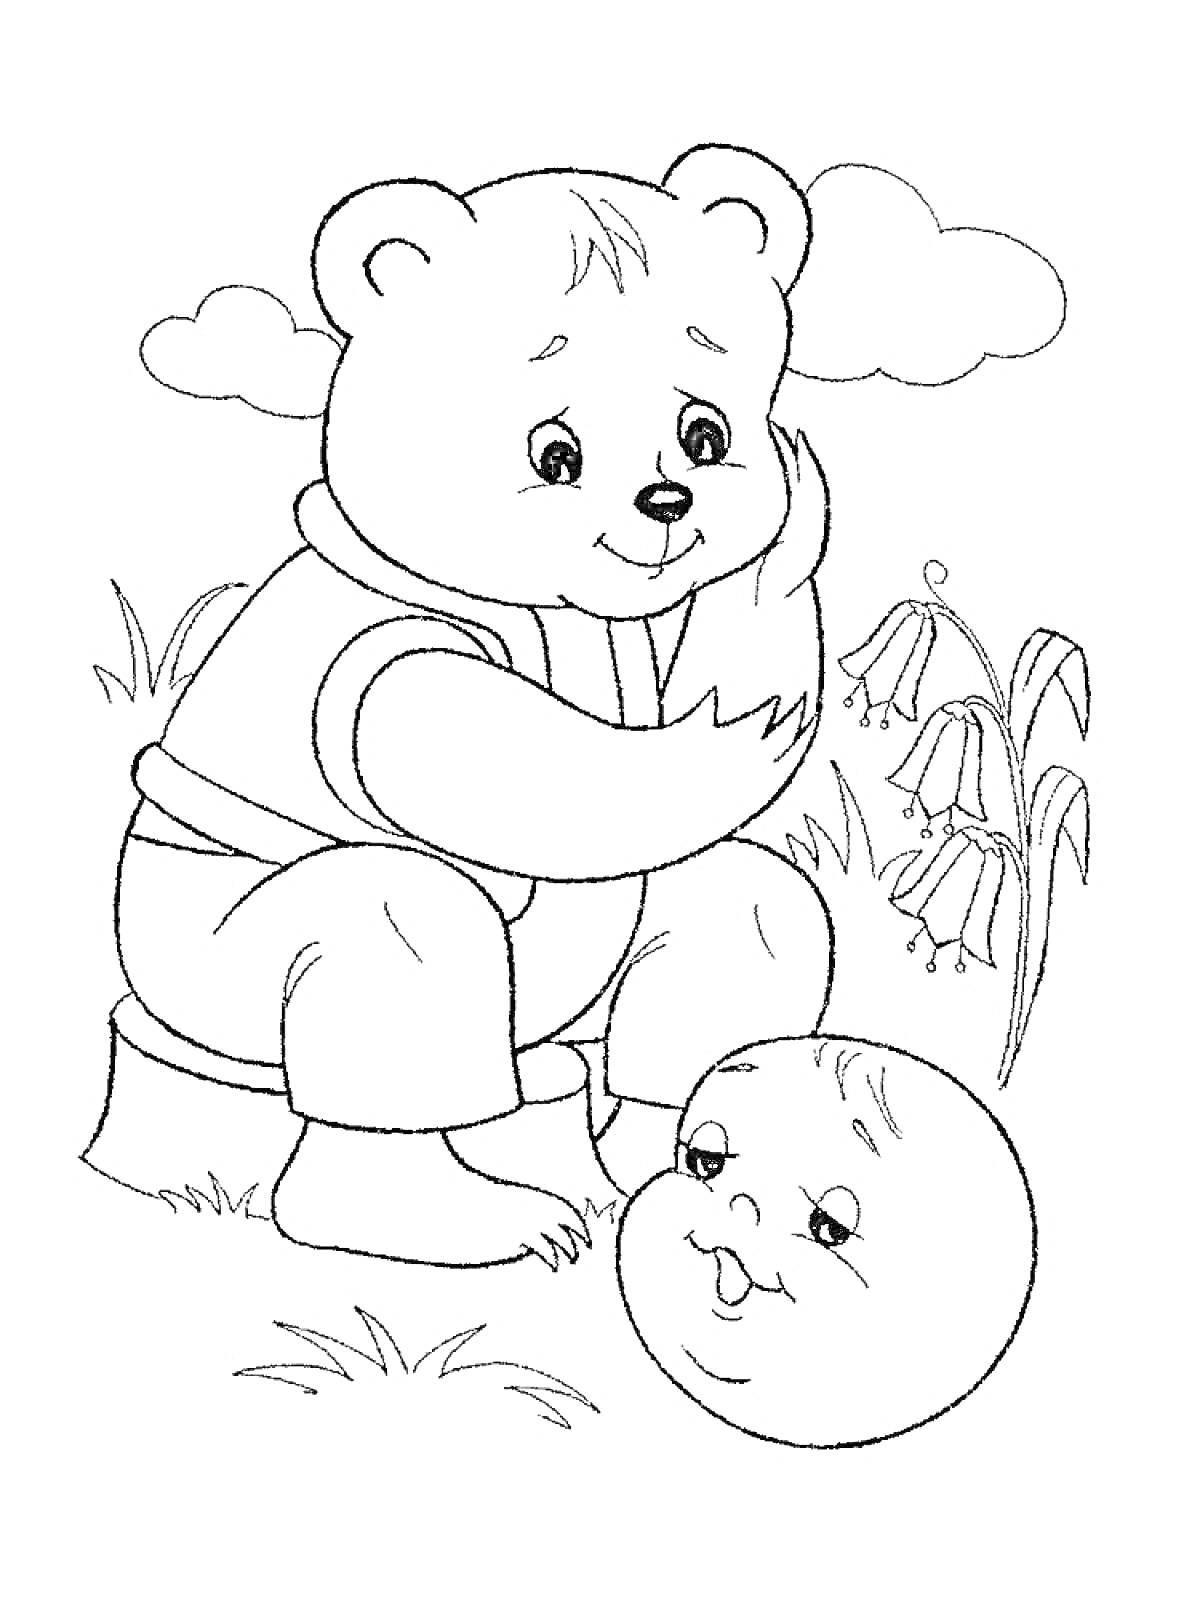 Раскраска Медвежонок и Колобок на лугу с цветами и облаками